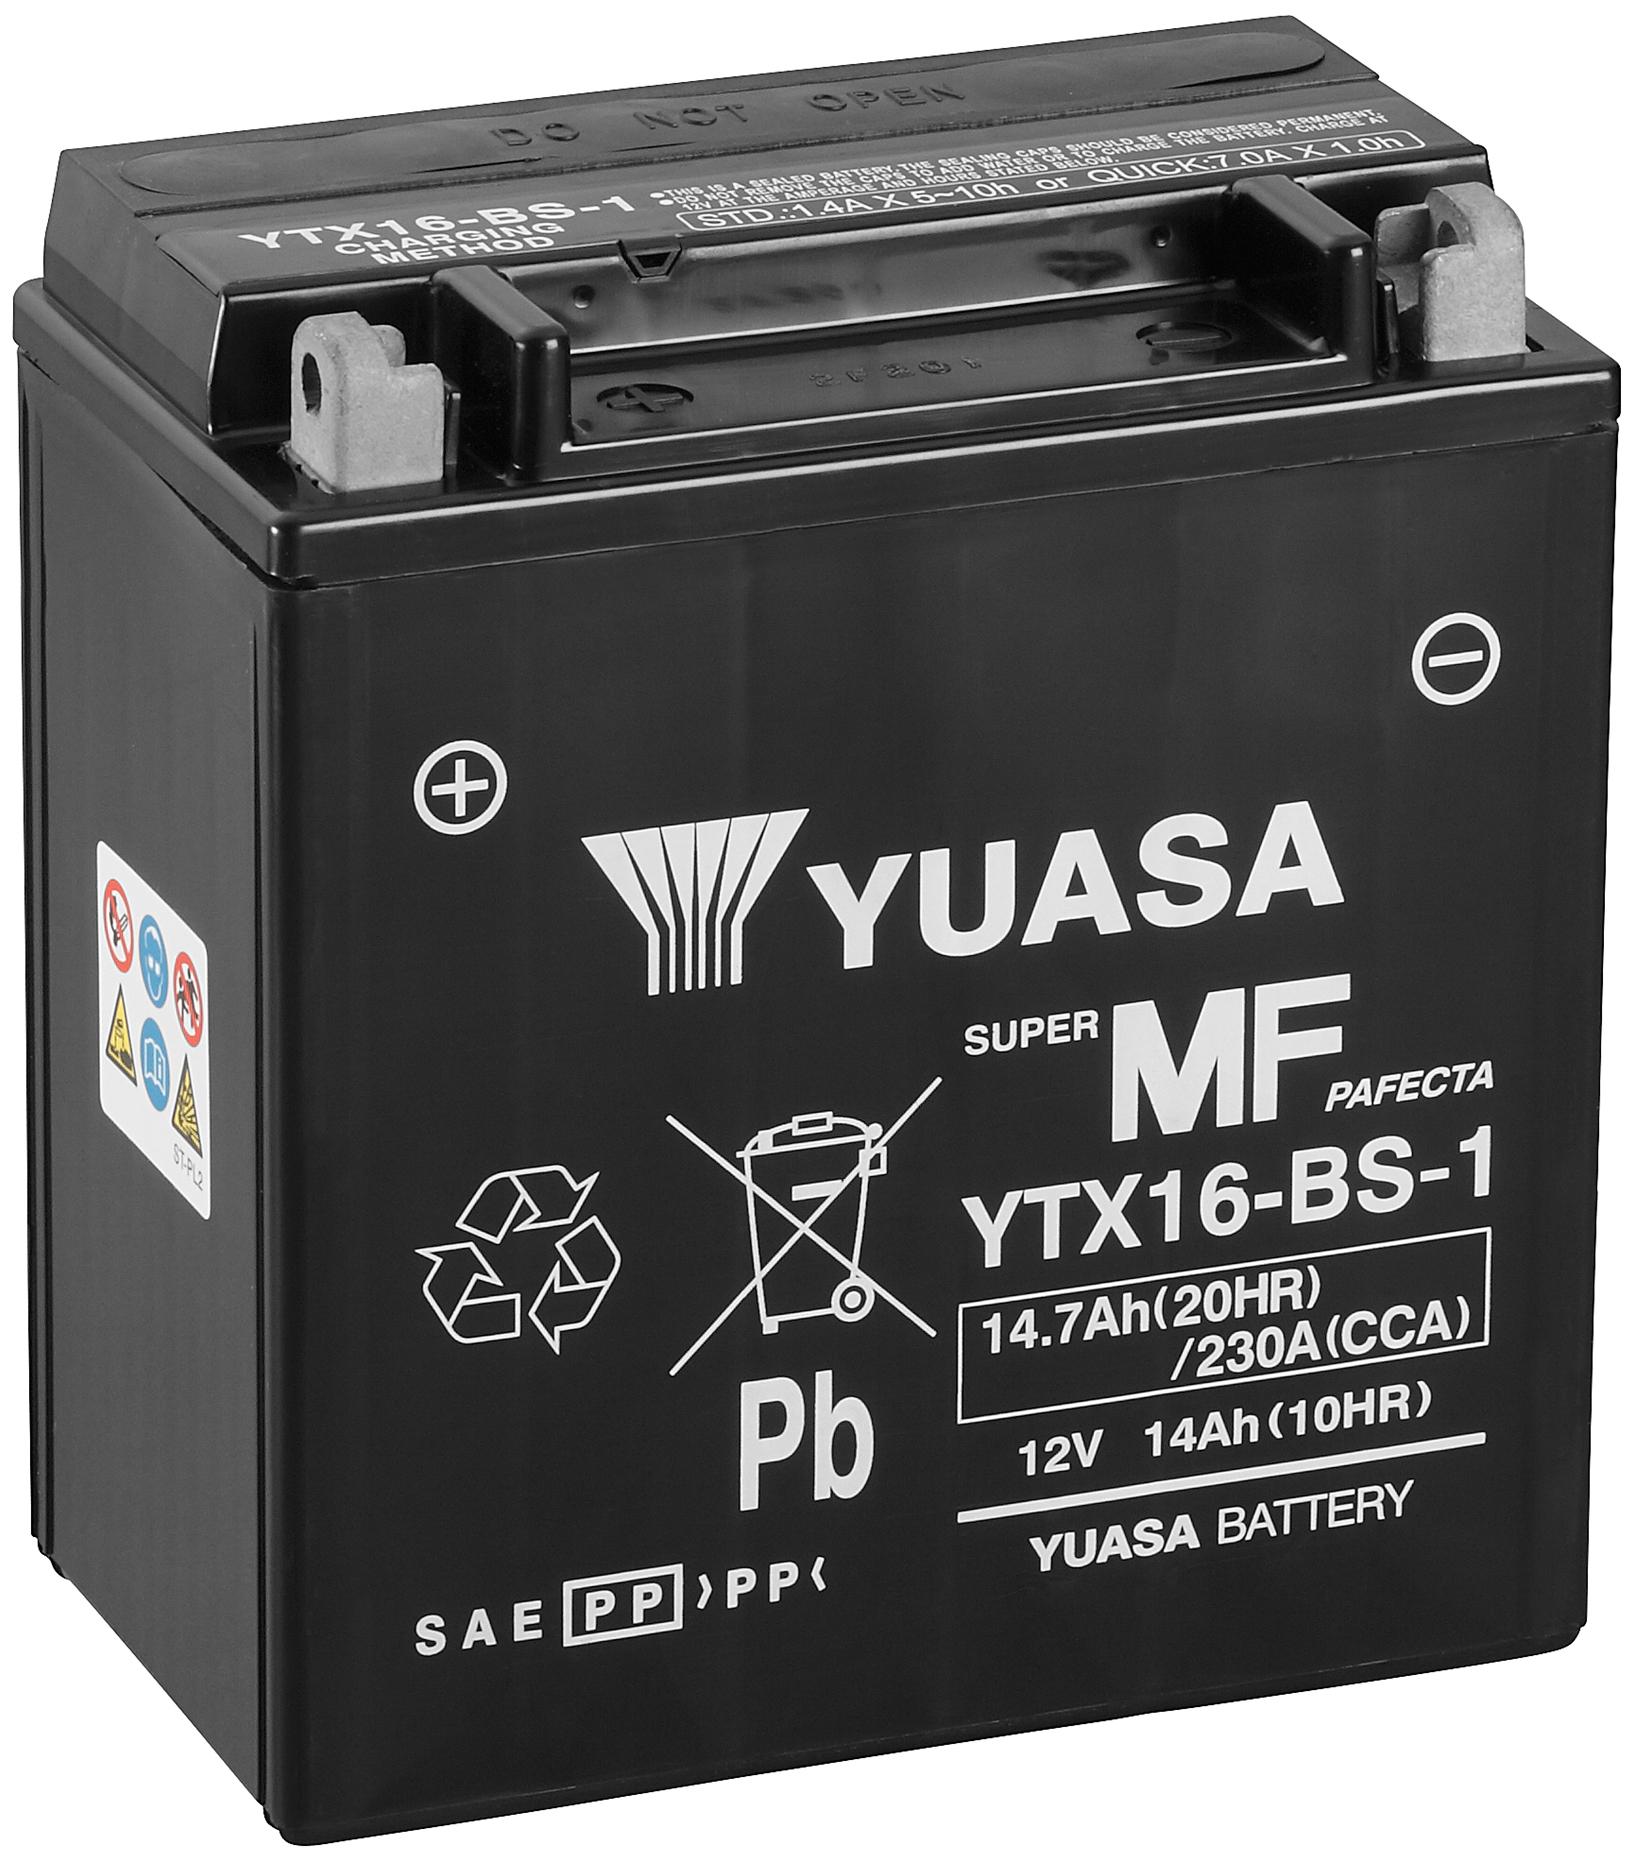 Yuasa Ytx16-Bs-1 12V Maintenance Free Vrla Battery